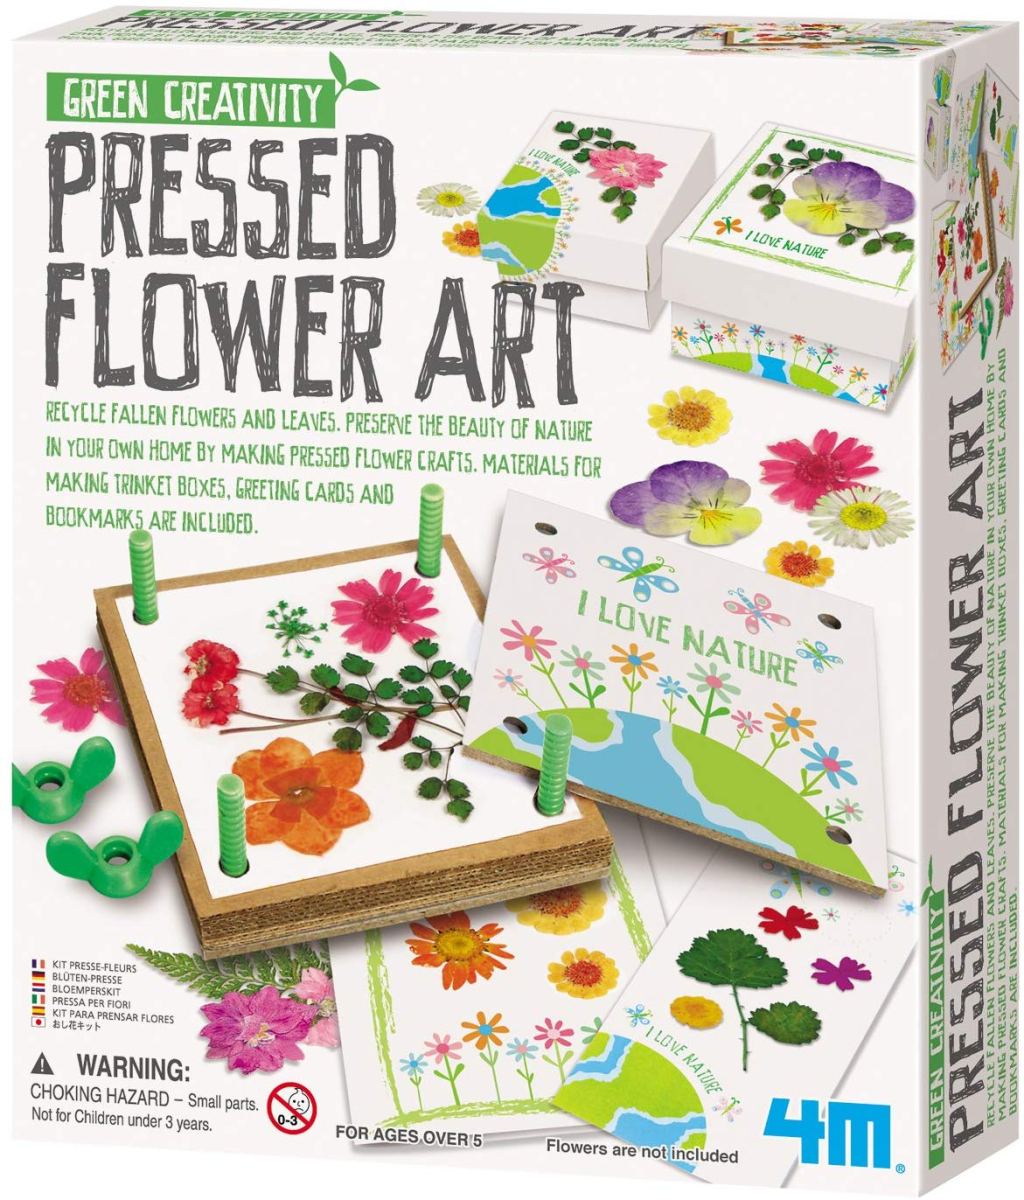 Pressed Flower Art kit in box